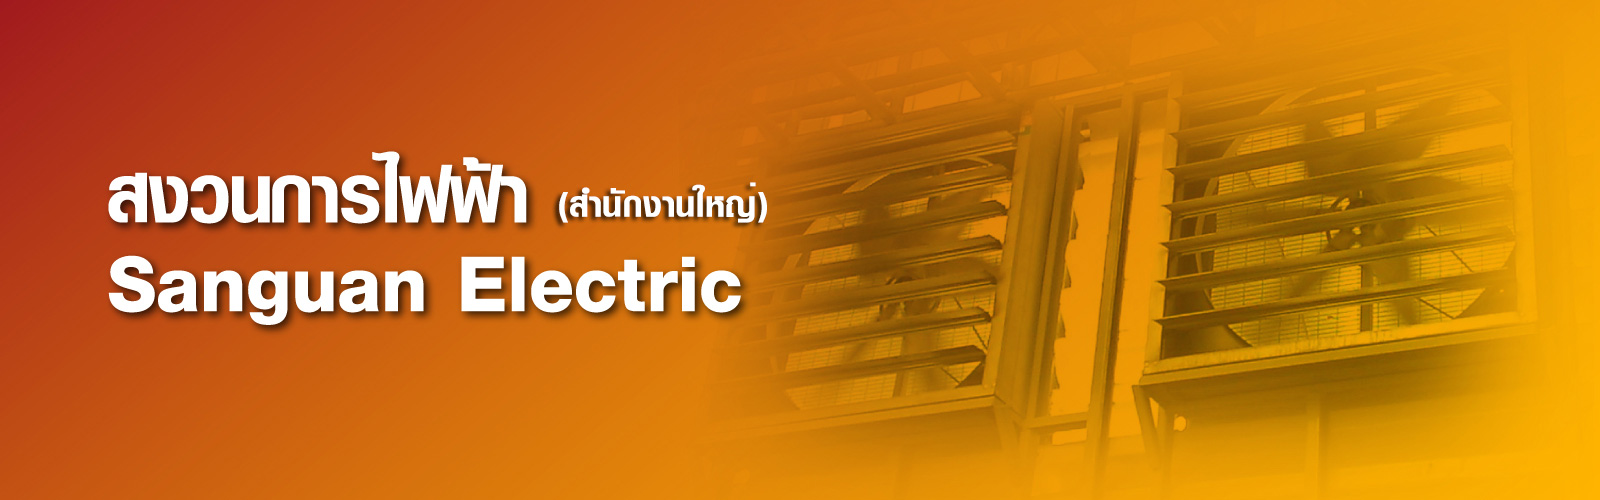 SANGUAN ELECTRIC (สงวนการไฟฟ้า)